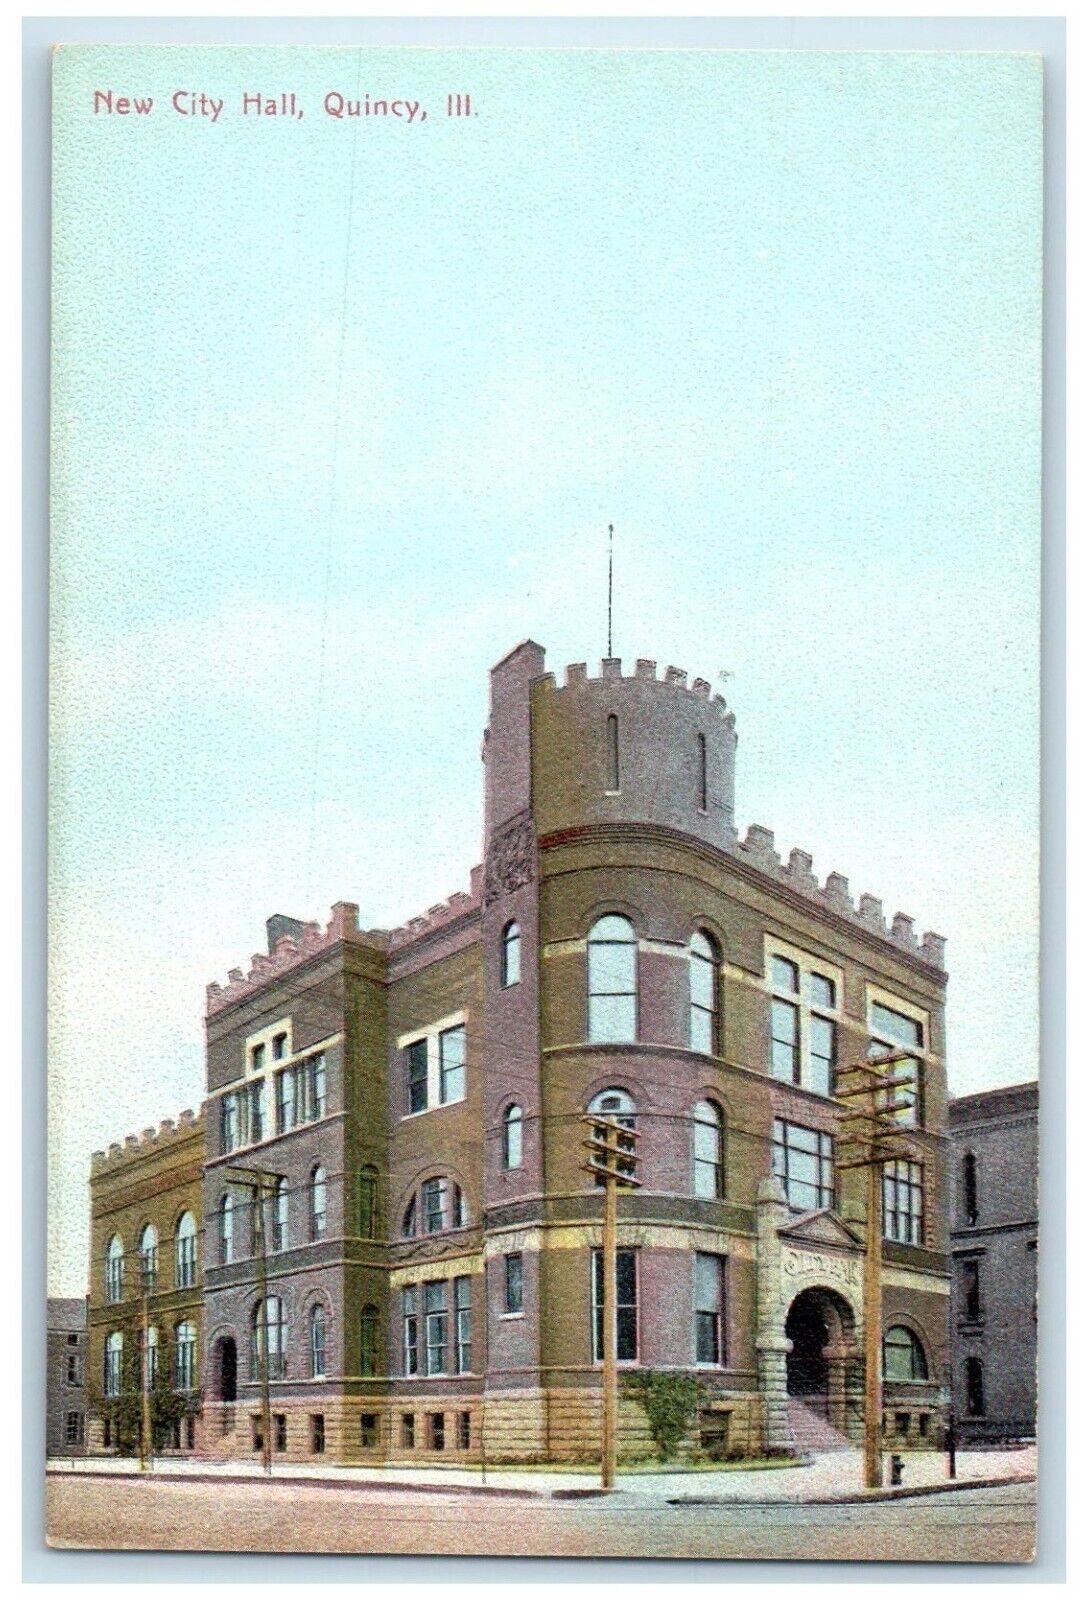 c1910 New City Hall Exterior Building Quincy Illinois Vintage Antique Postcard